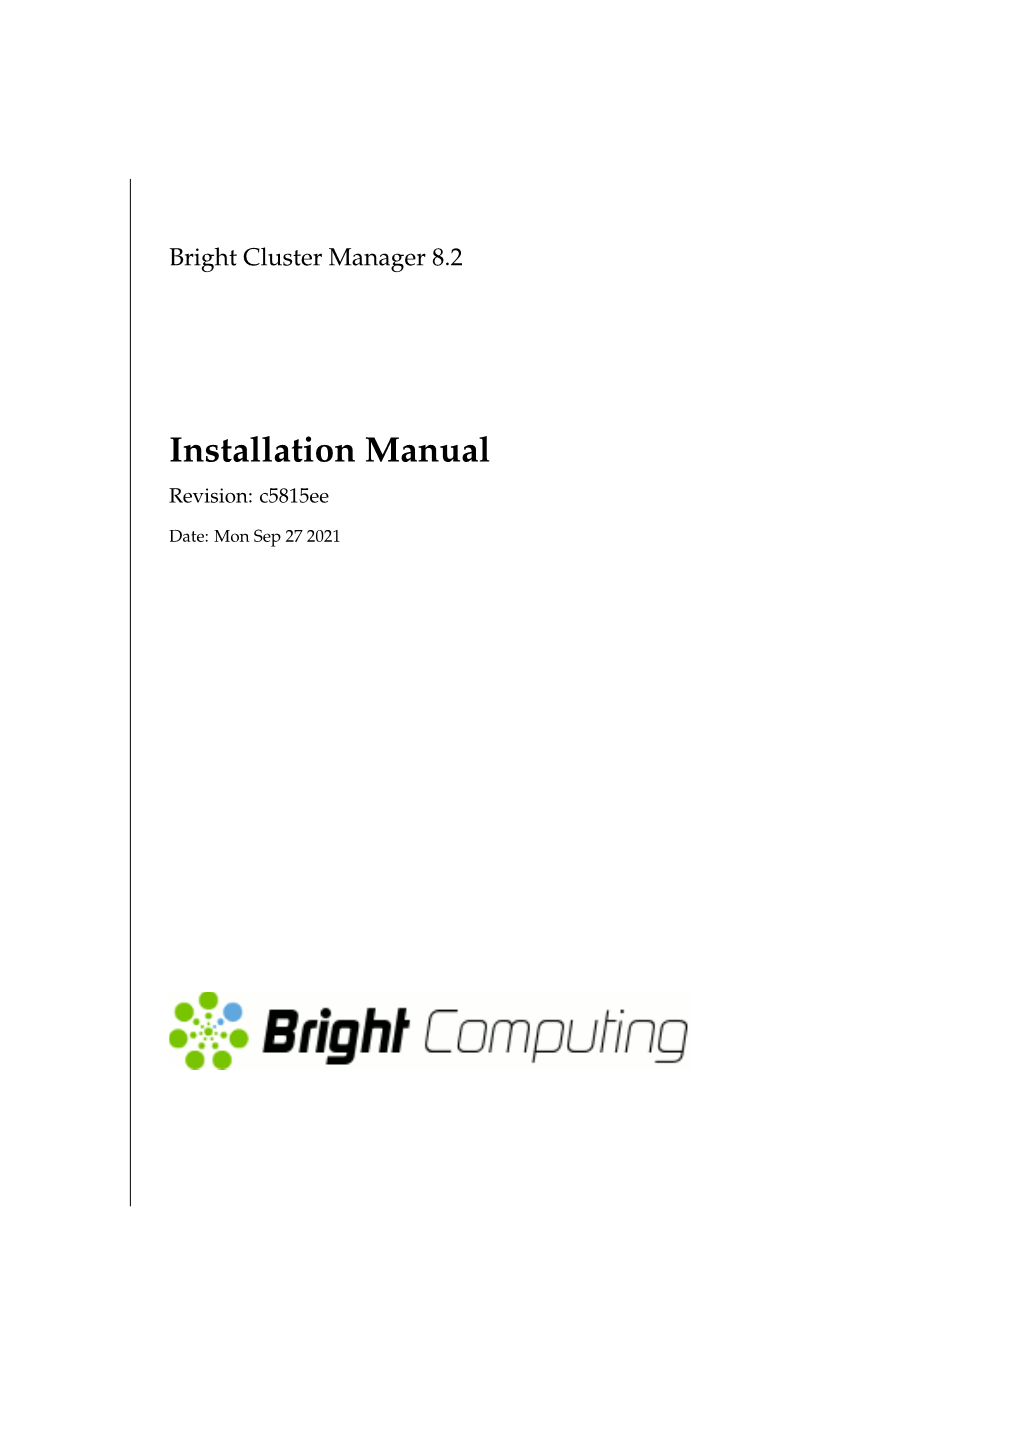 Installation Manual Revision: C5815ee